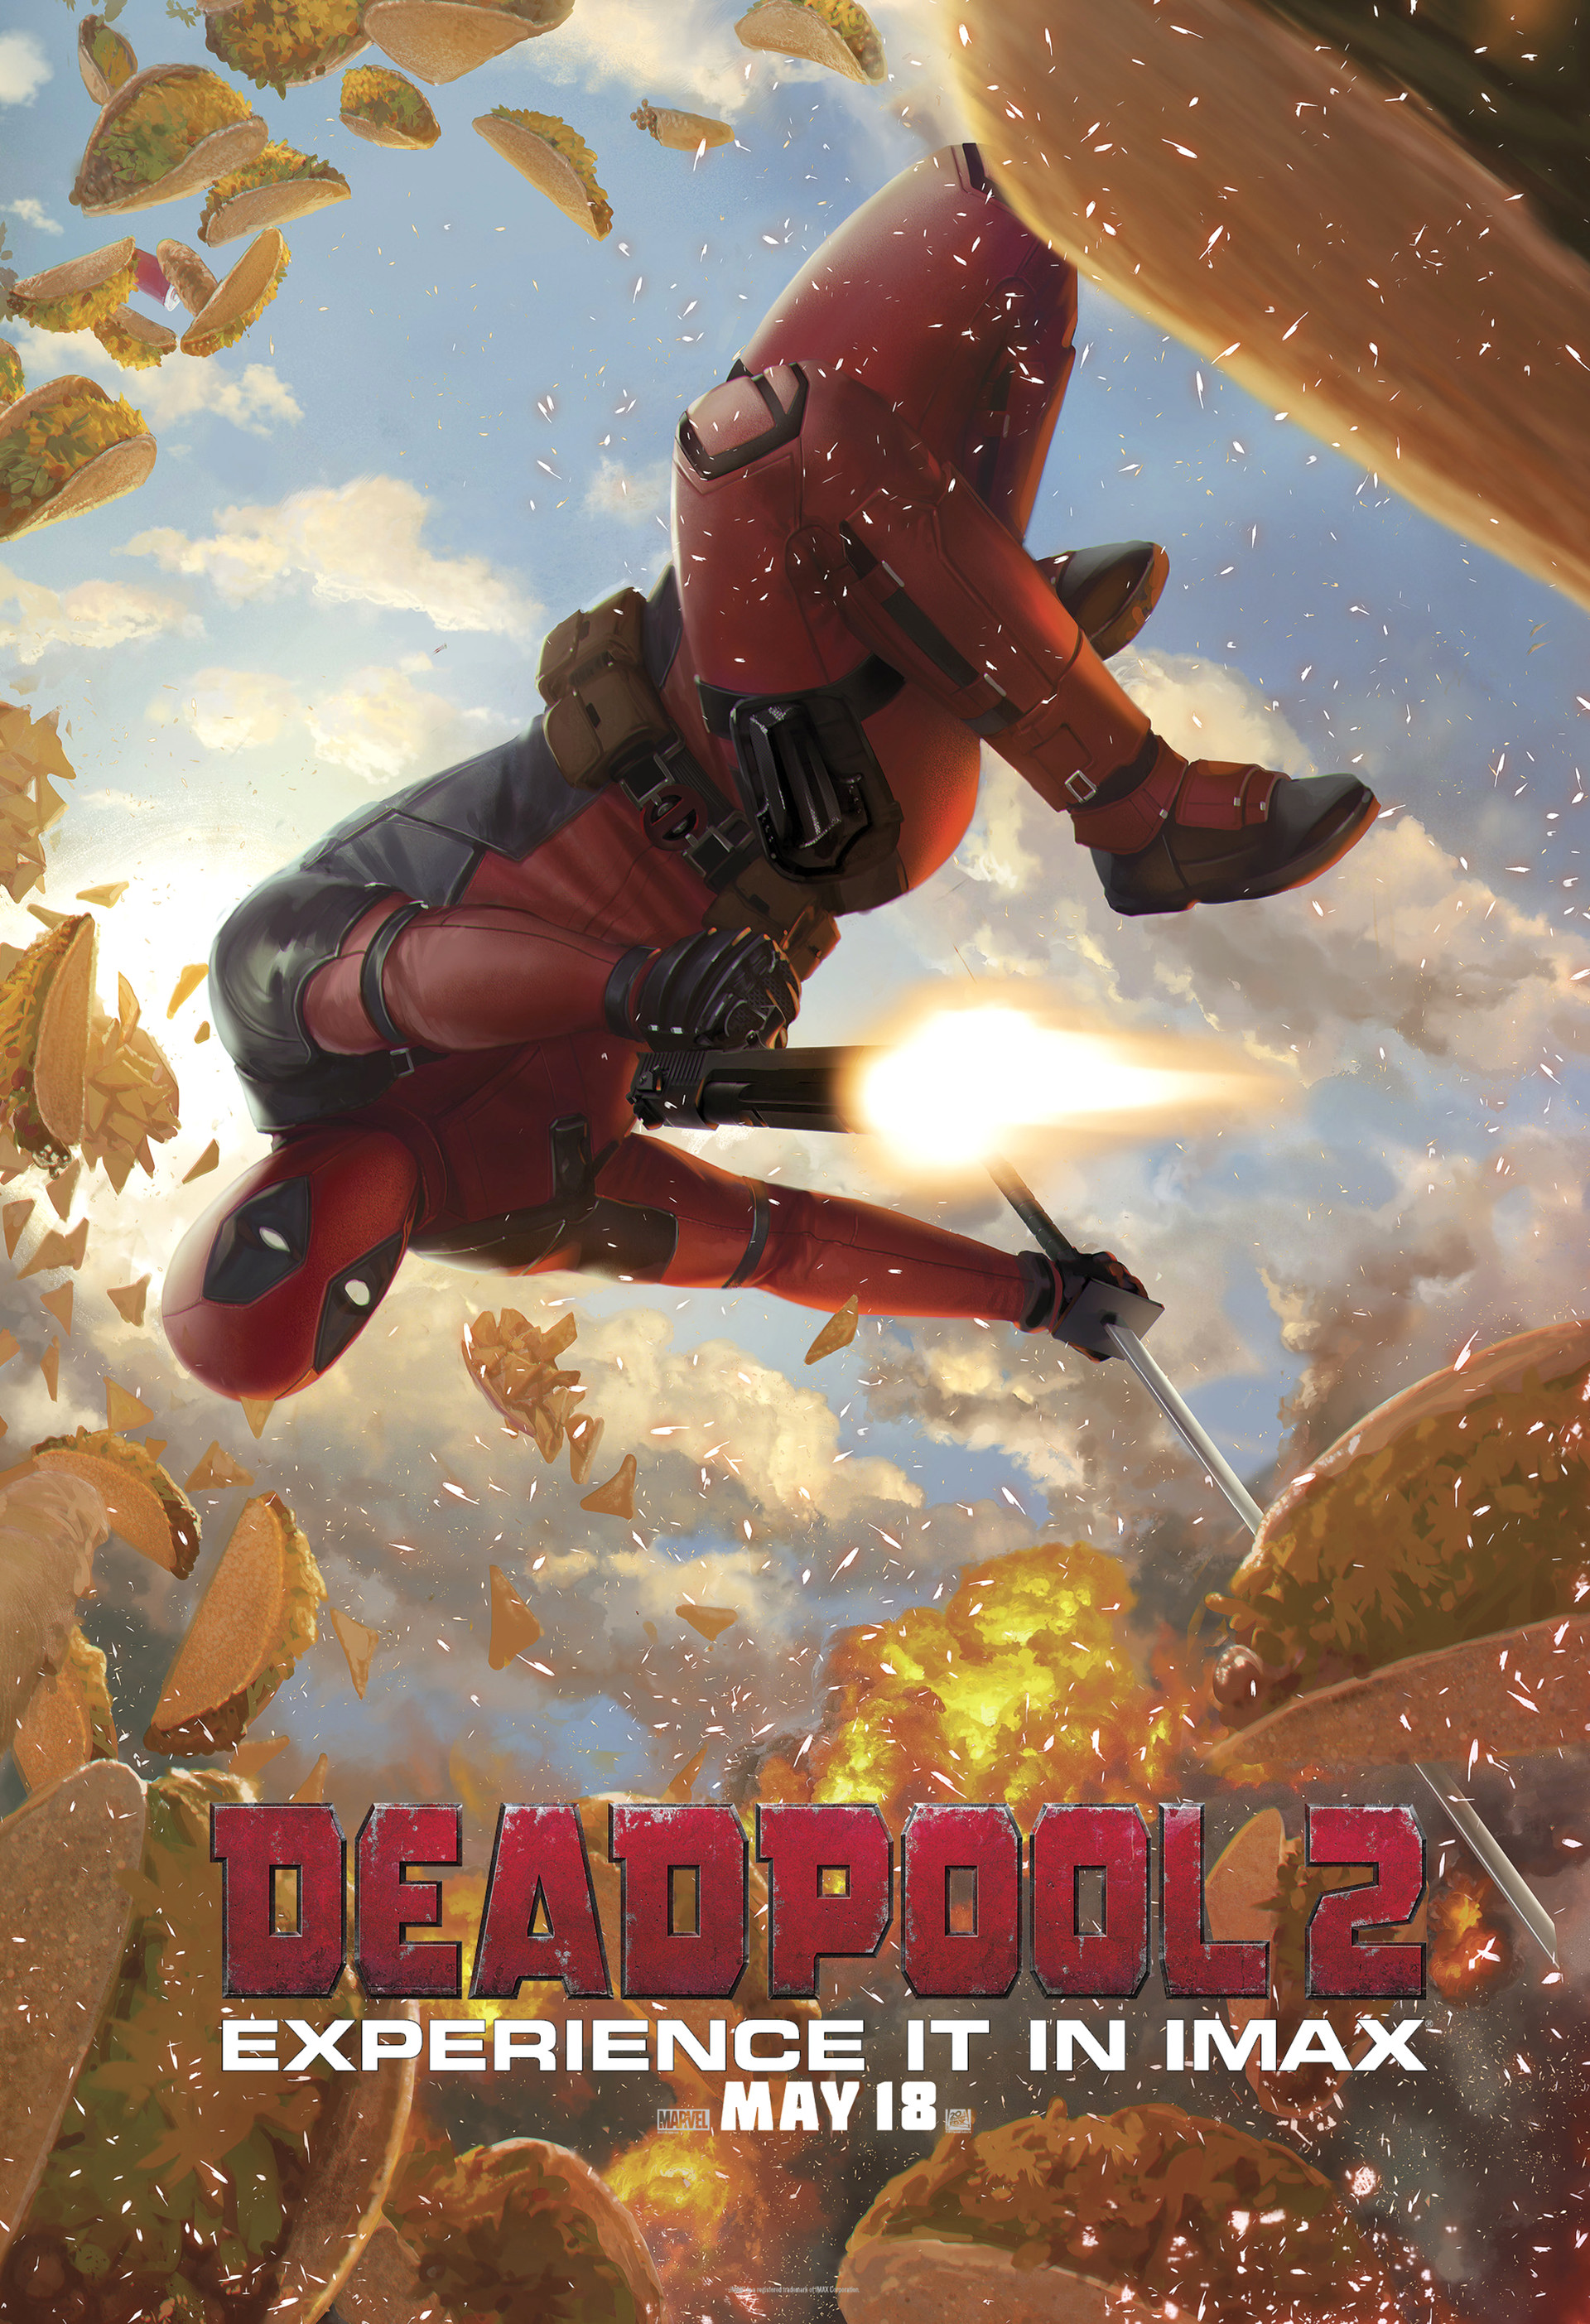 ArtStation - Deadpool 3 poster concept